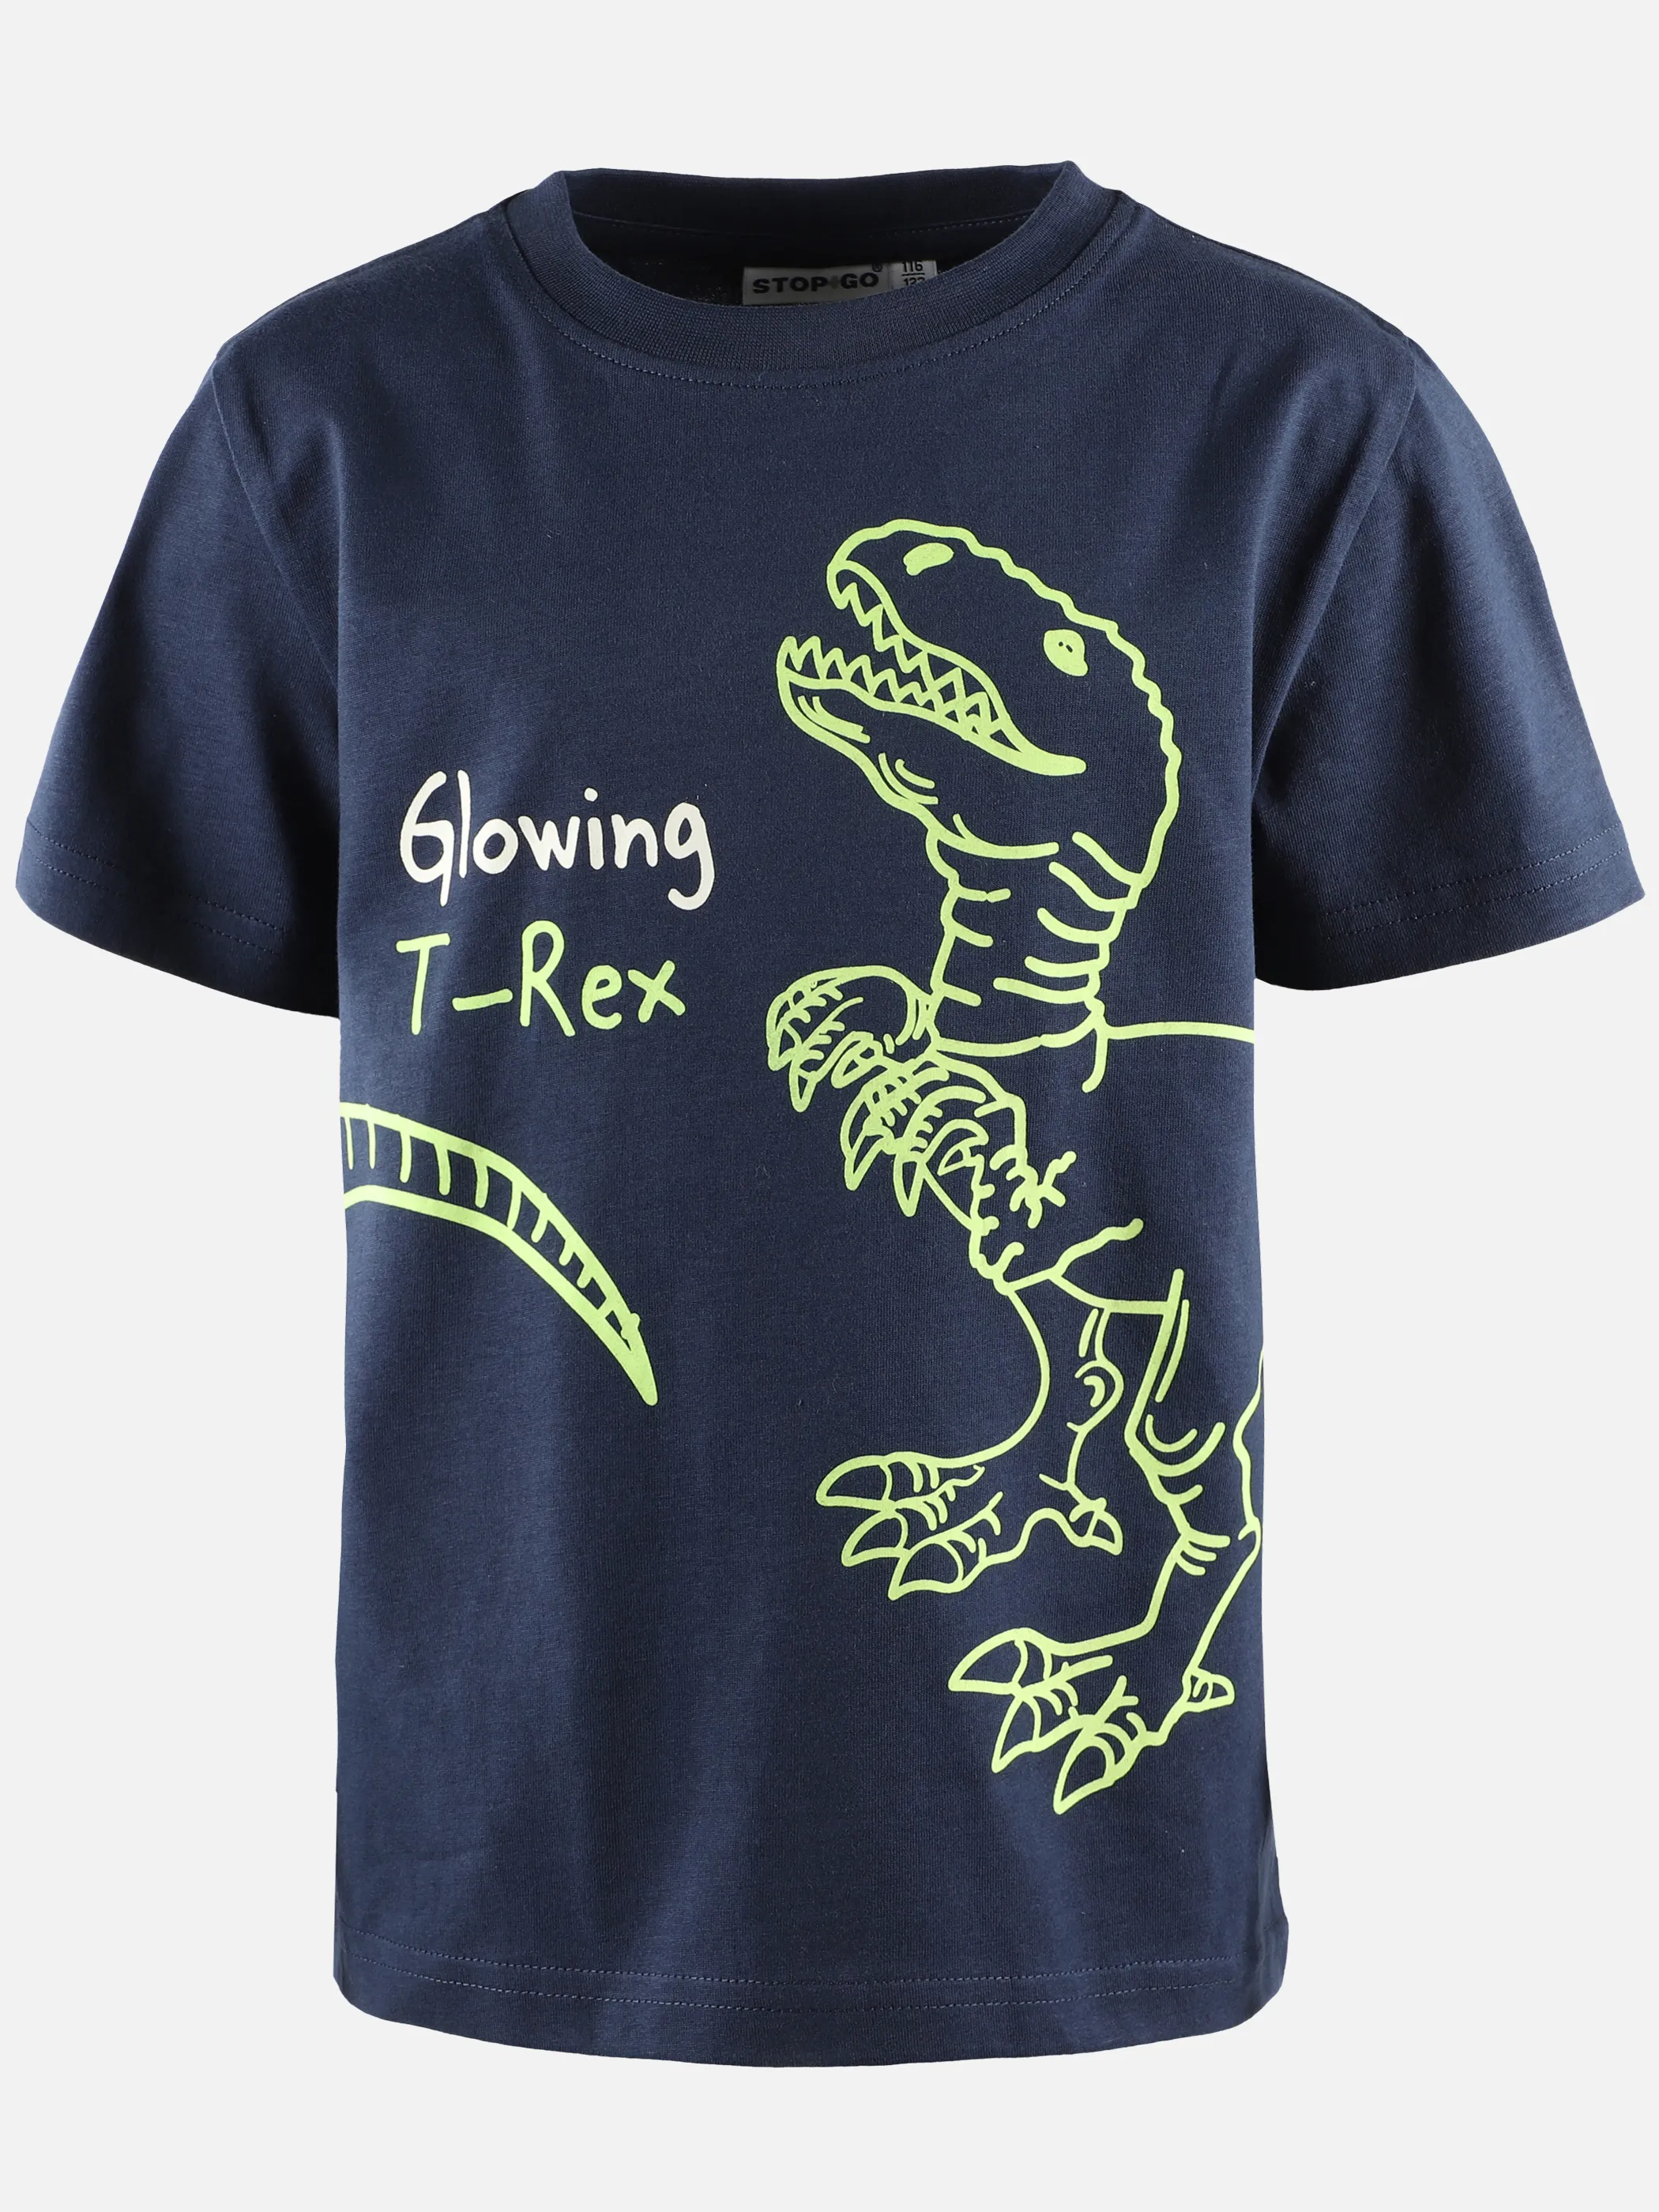 Stop + Go KJ T-Shirt mit glow in the dark Dinoprint in blau Blau 890221 DUNKELBLAU 1